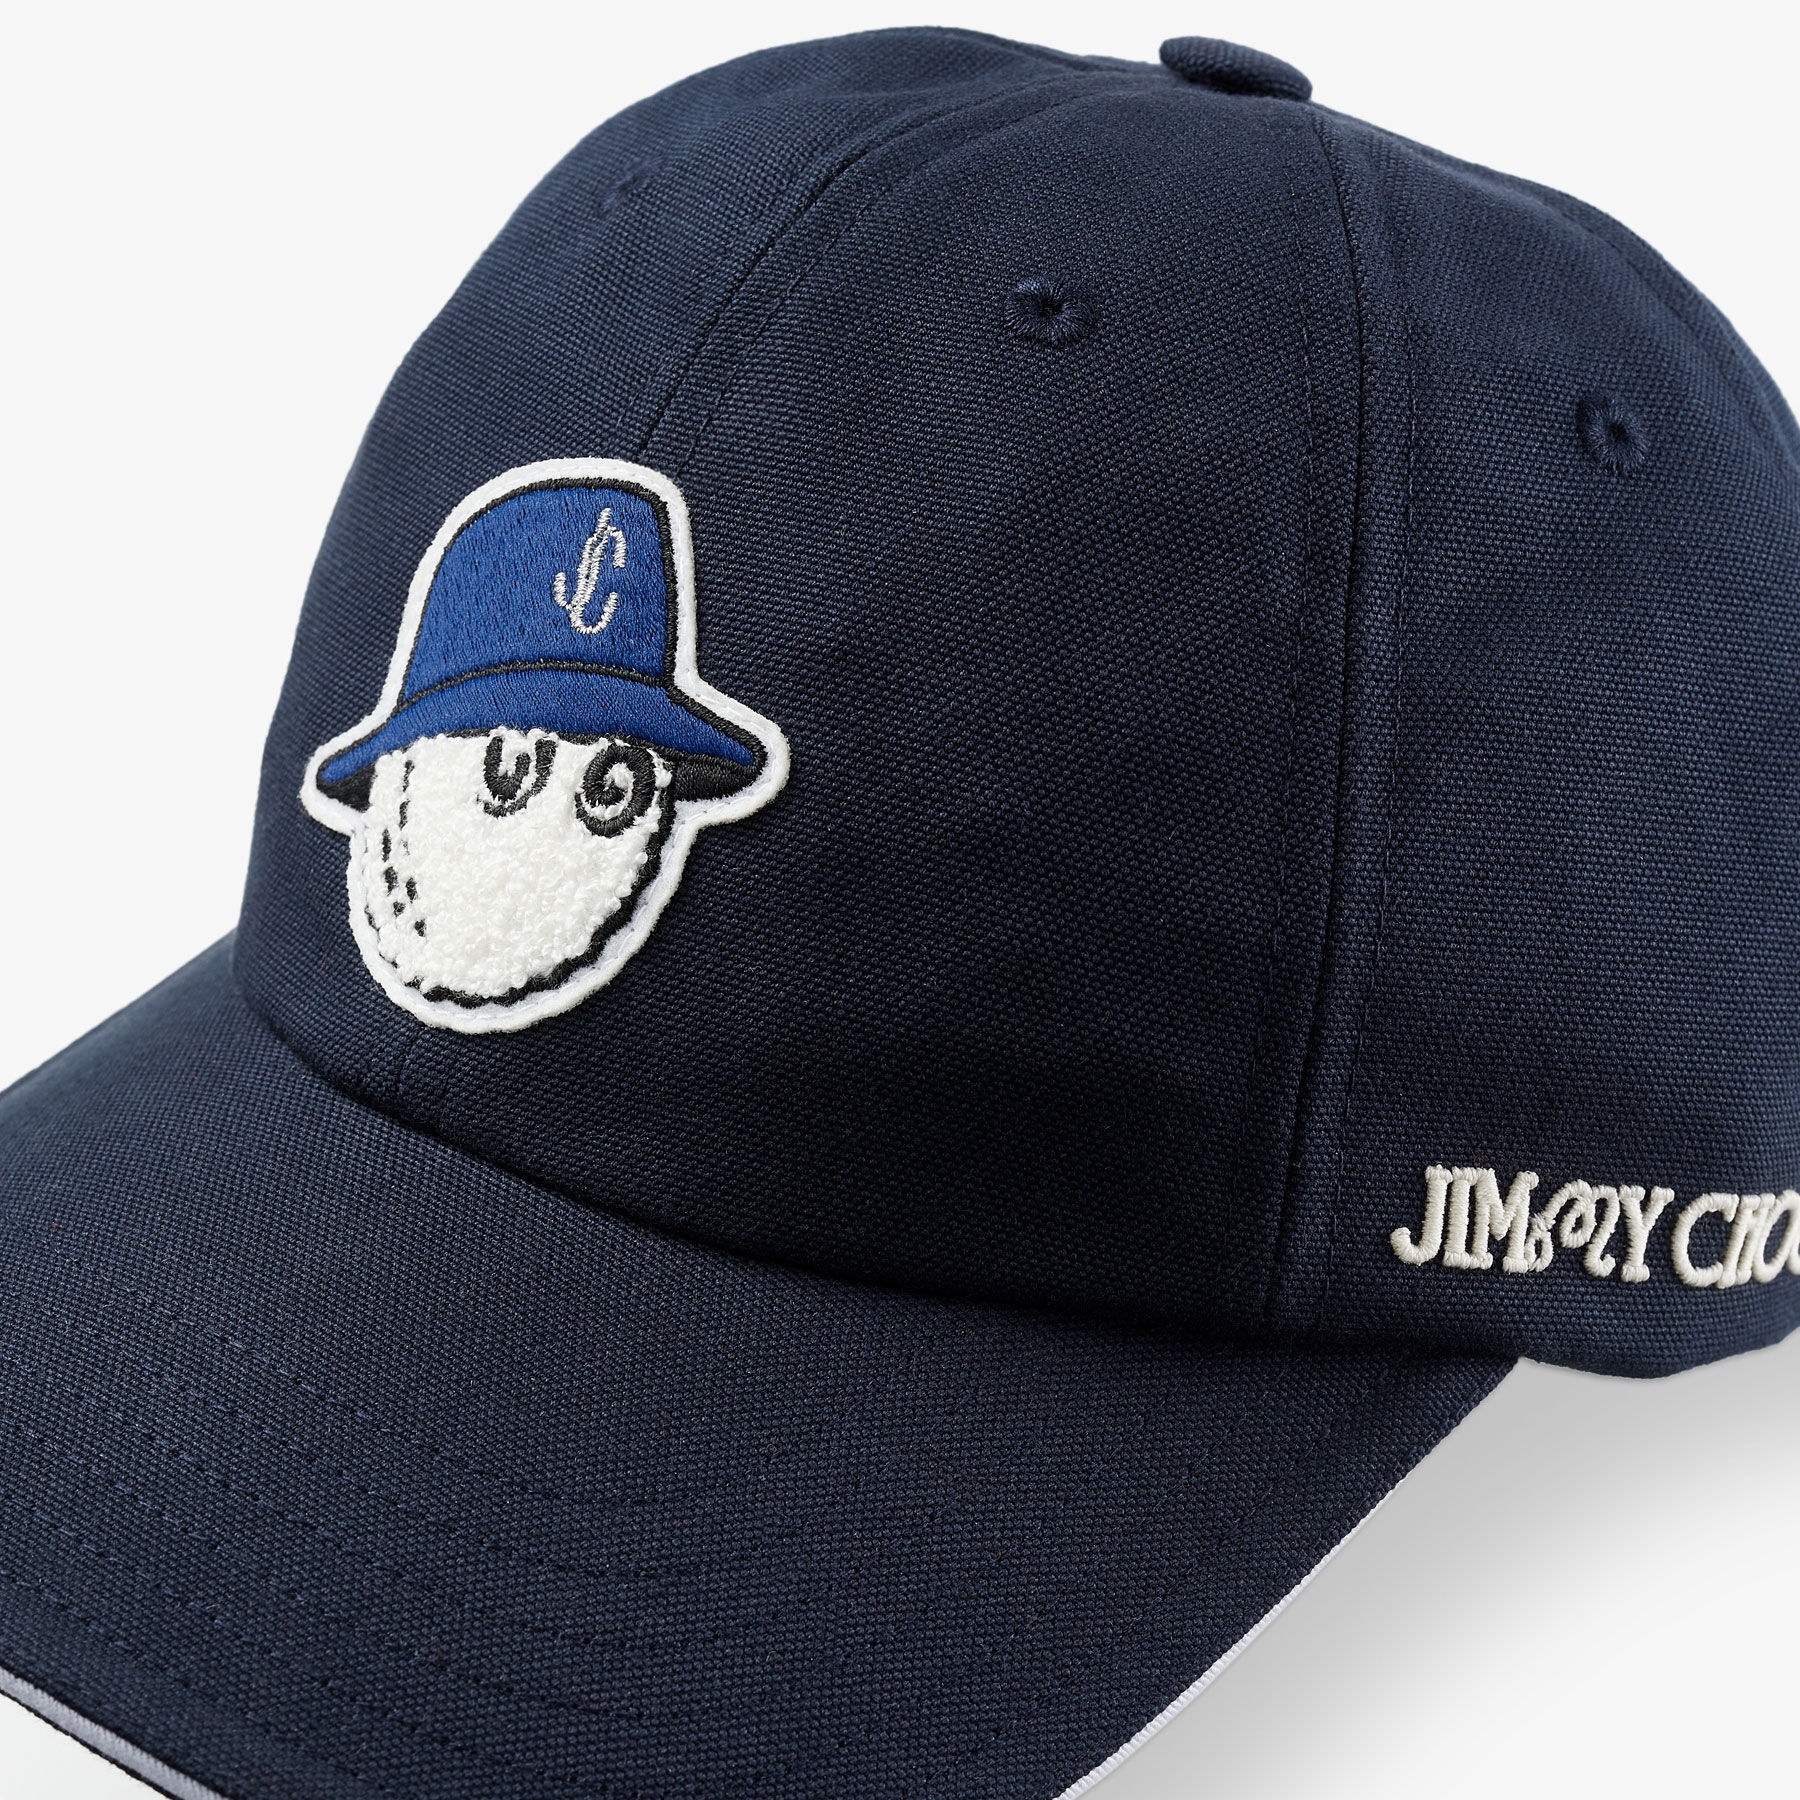 Jimmy Choo / Malbon Cap
Navy Embroidered Cotton Cap - 2